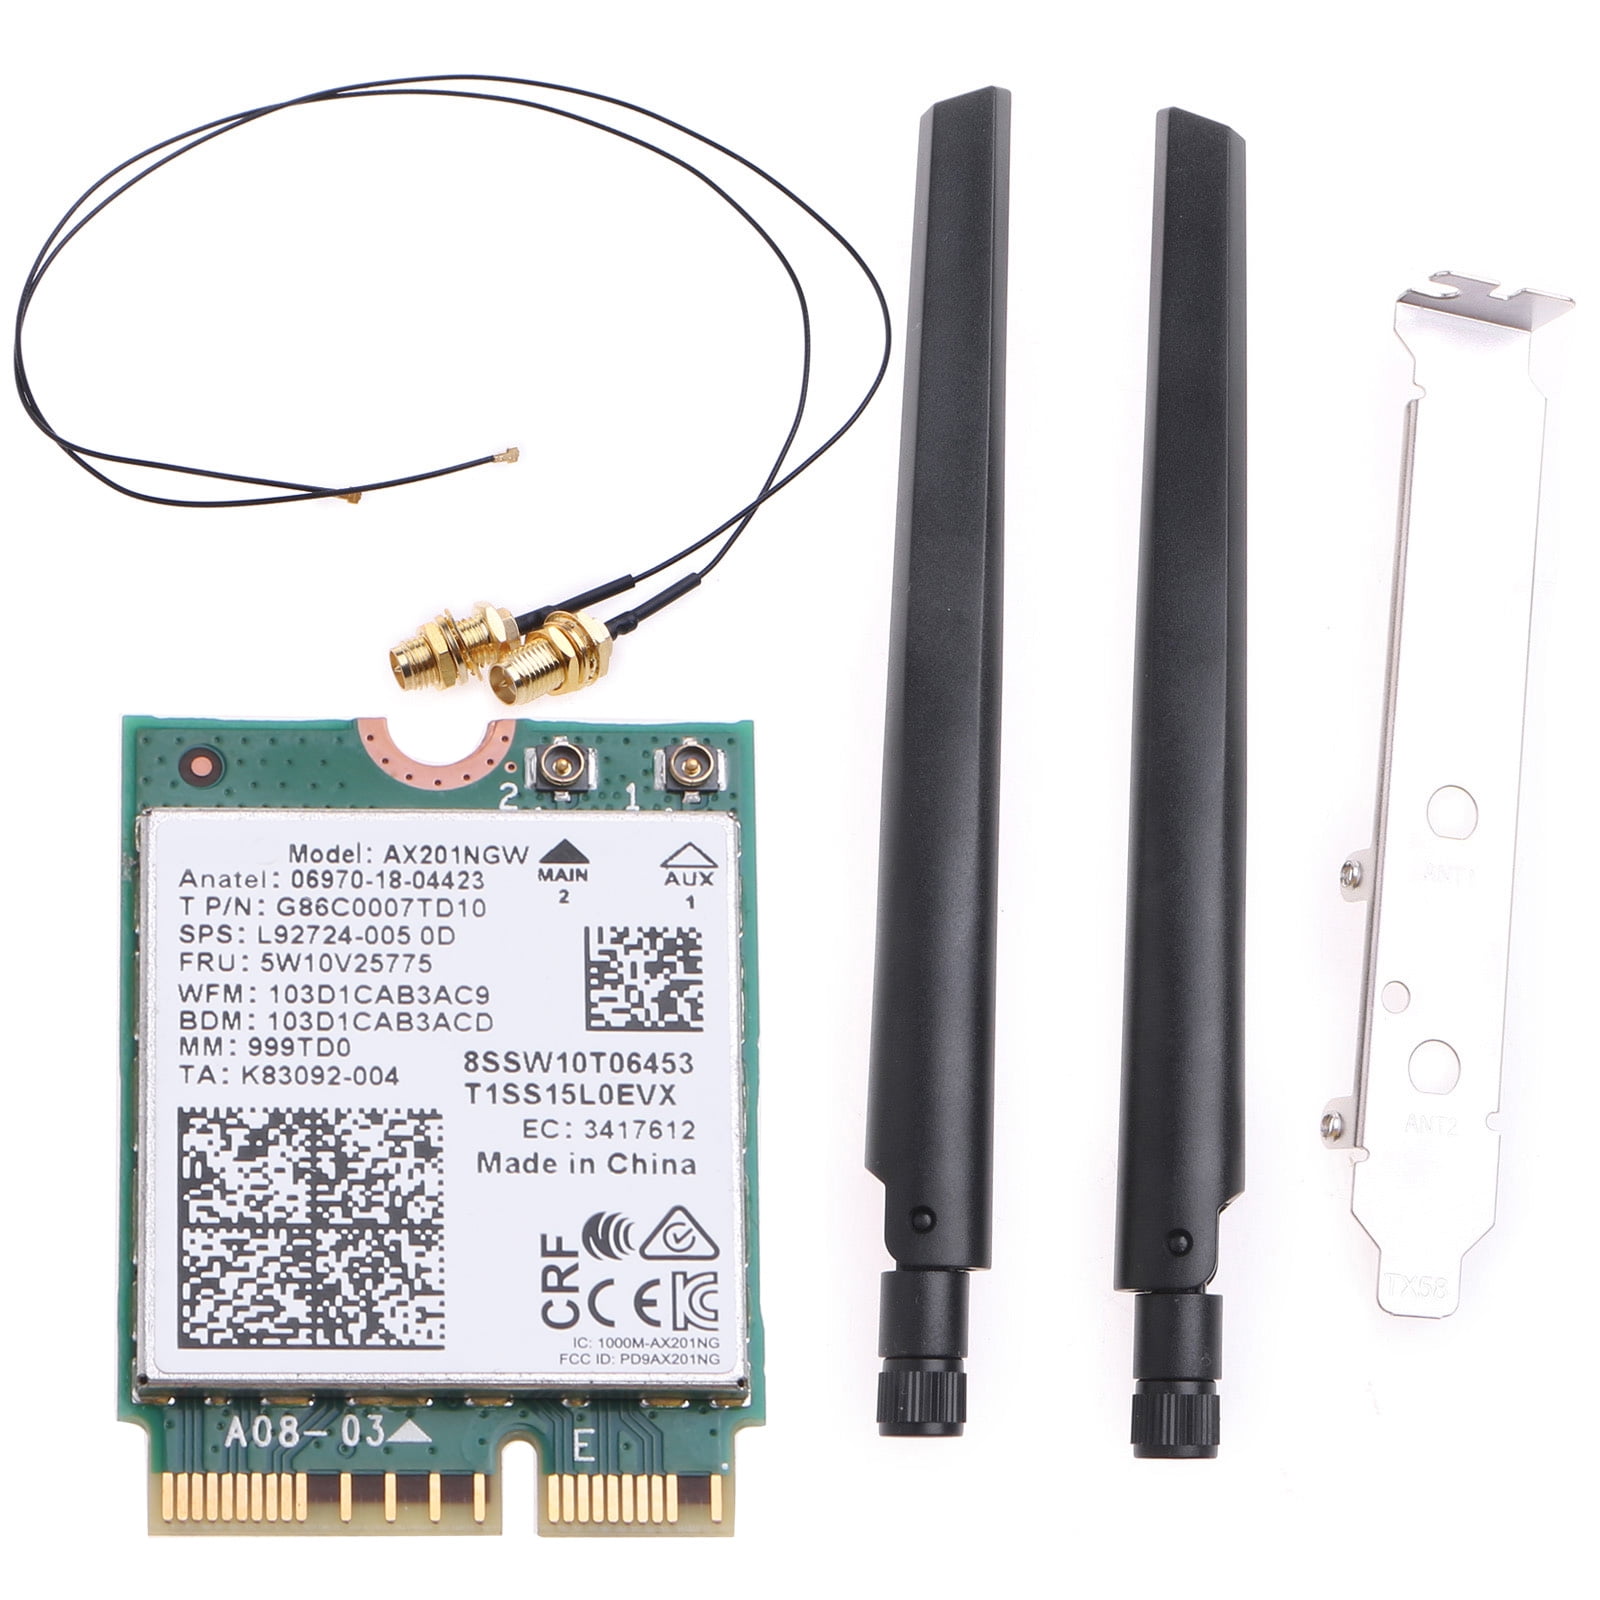 YEUHTLL WiFi Key E M.2 CNVio2 Desktop Adapter 5.0 Wireless 802.11ax 2.4G/5G/ Support MU-MIMO AX201NGW Gigabit Network Card - Walmart.com